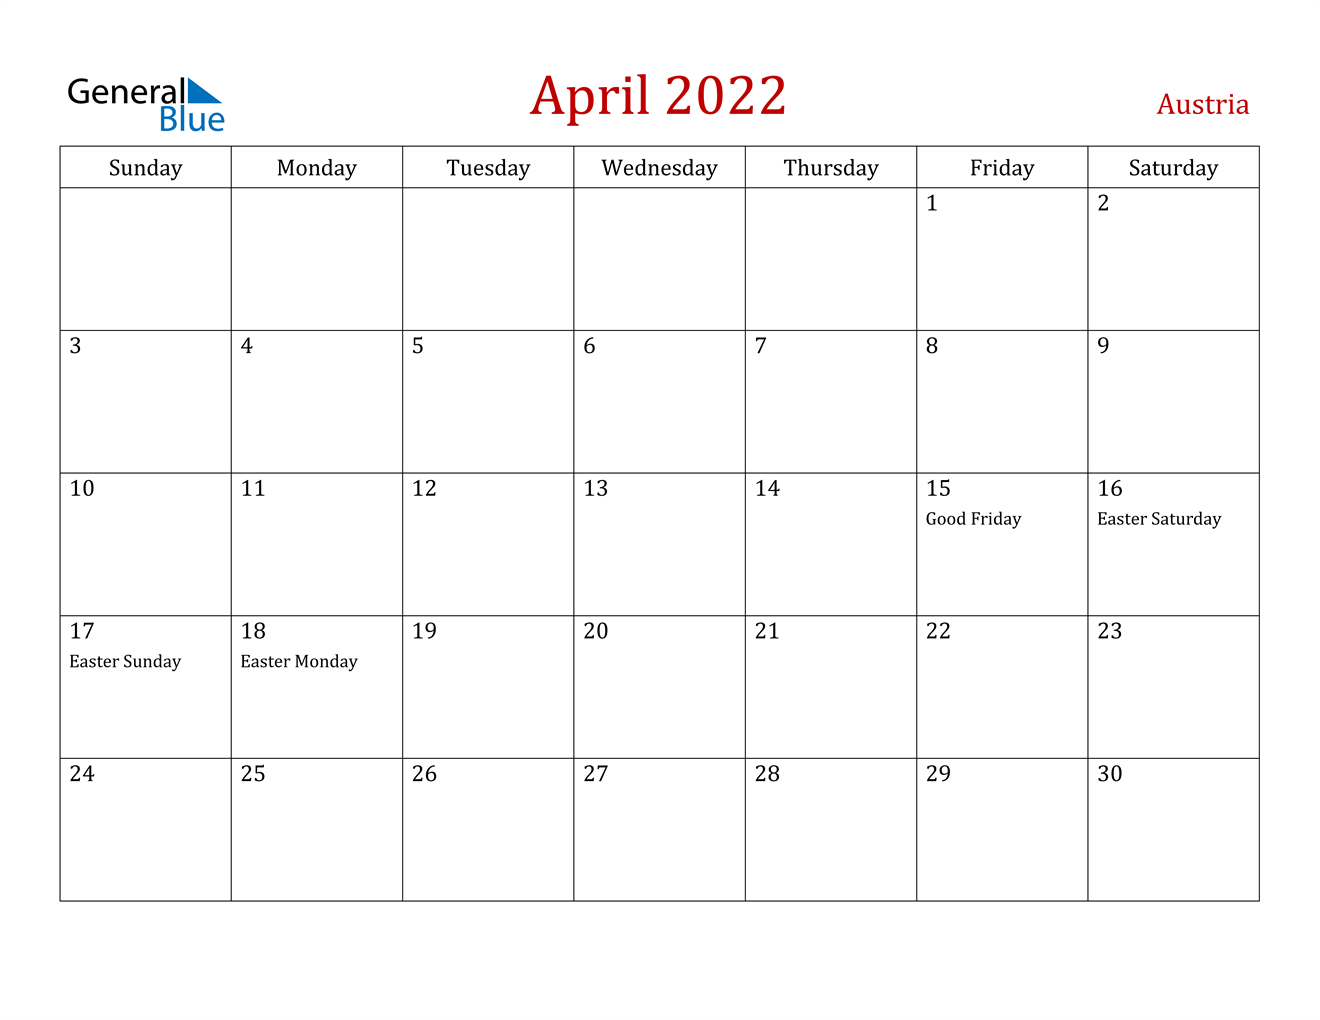 April 2022 Calendar - Austria